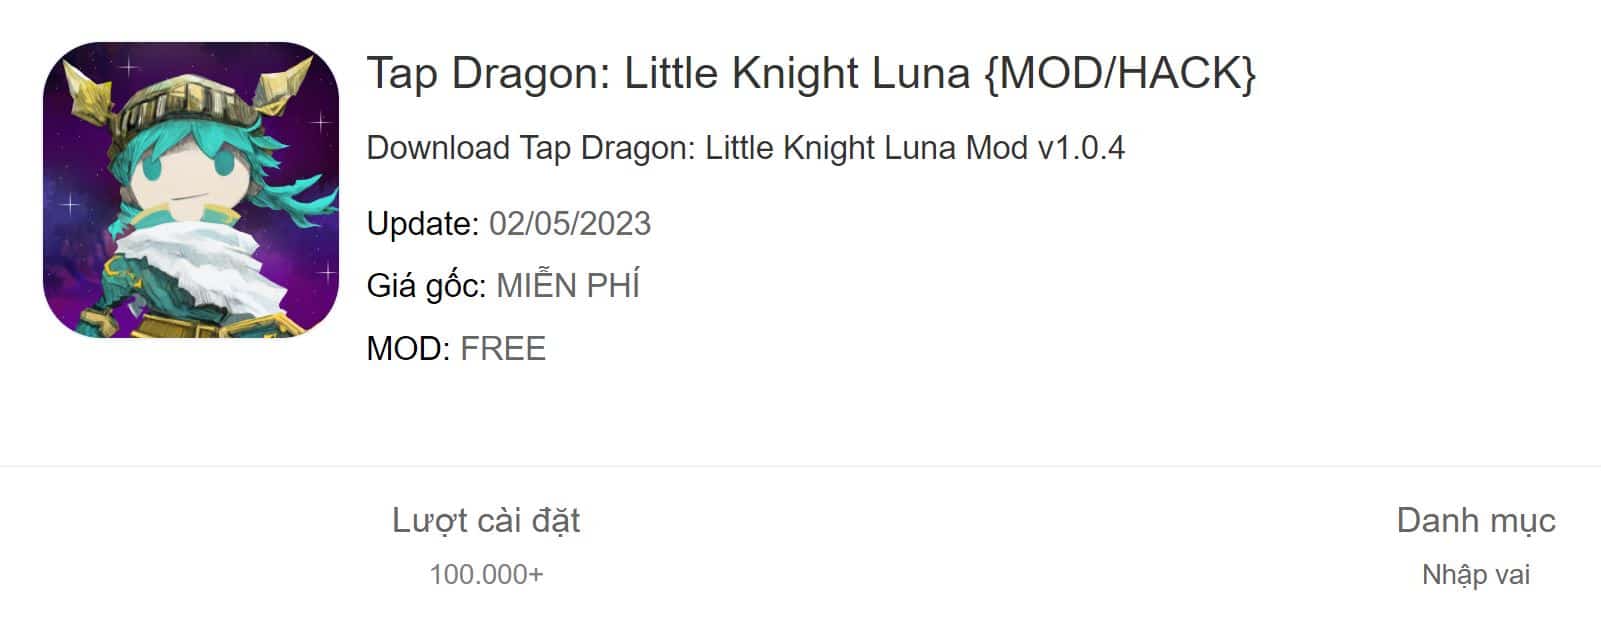 Tap Dragon Little Knight Luna Mod v1.0.4